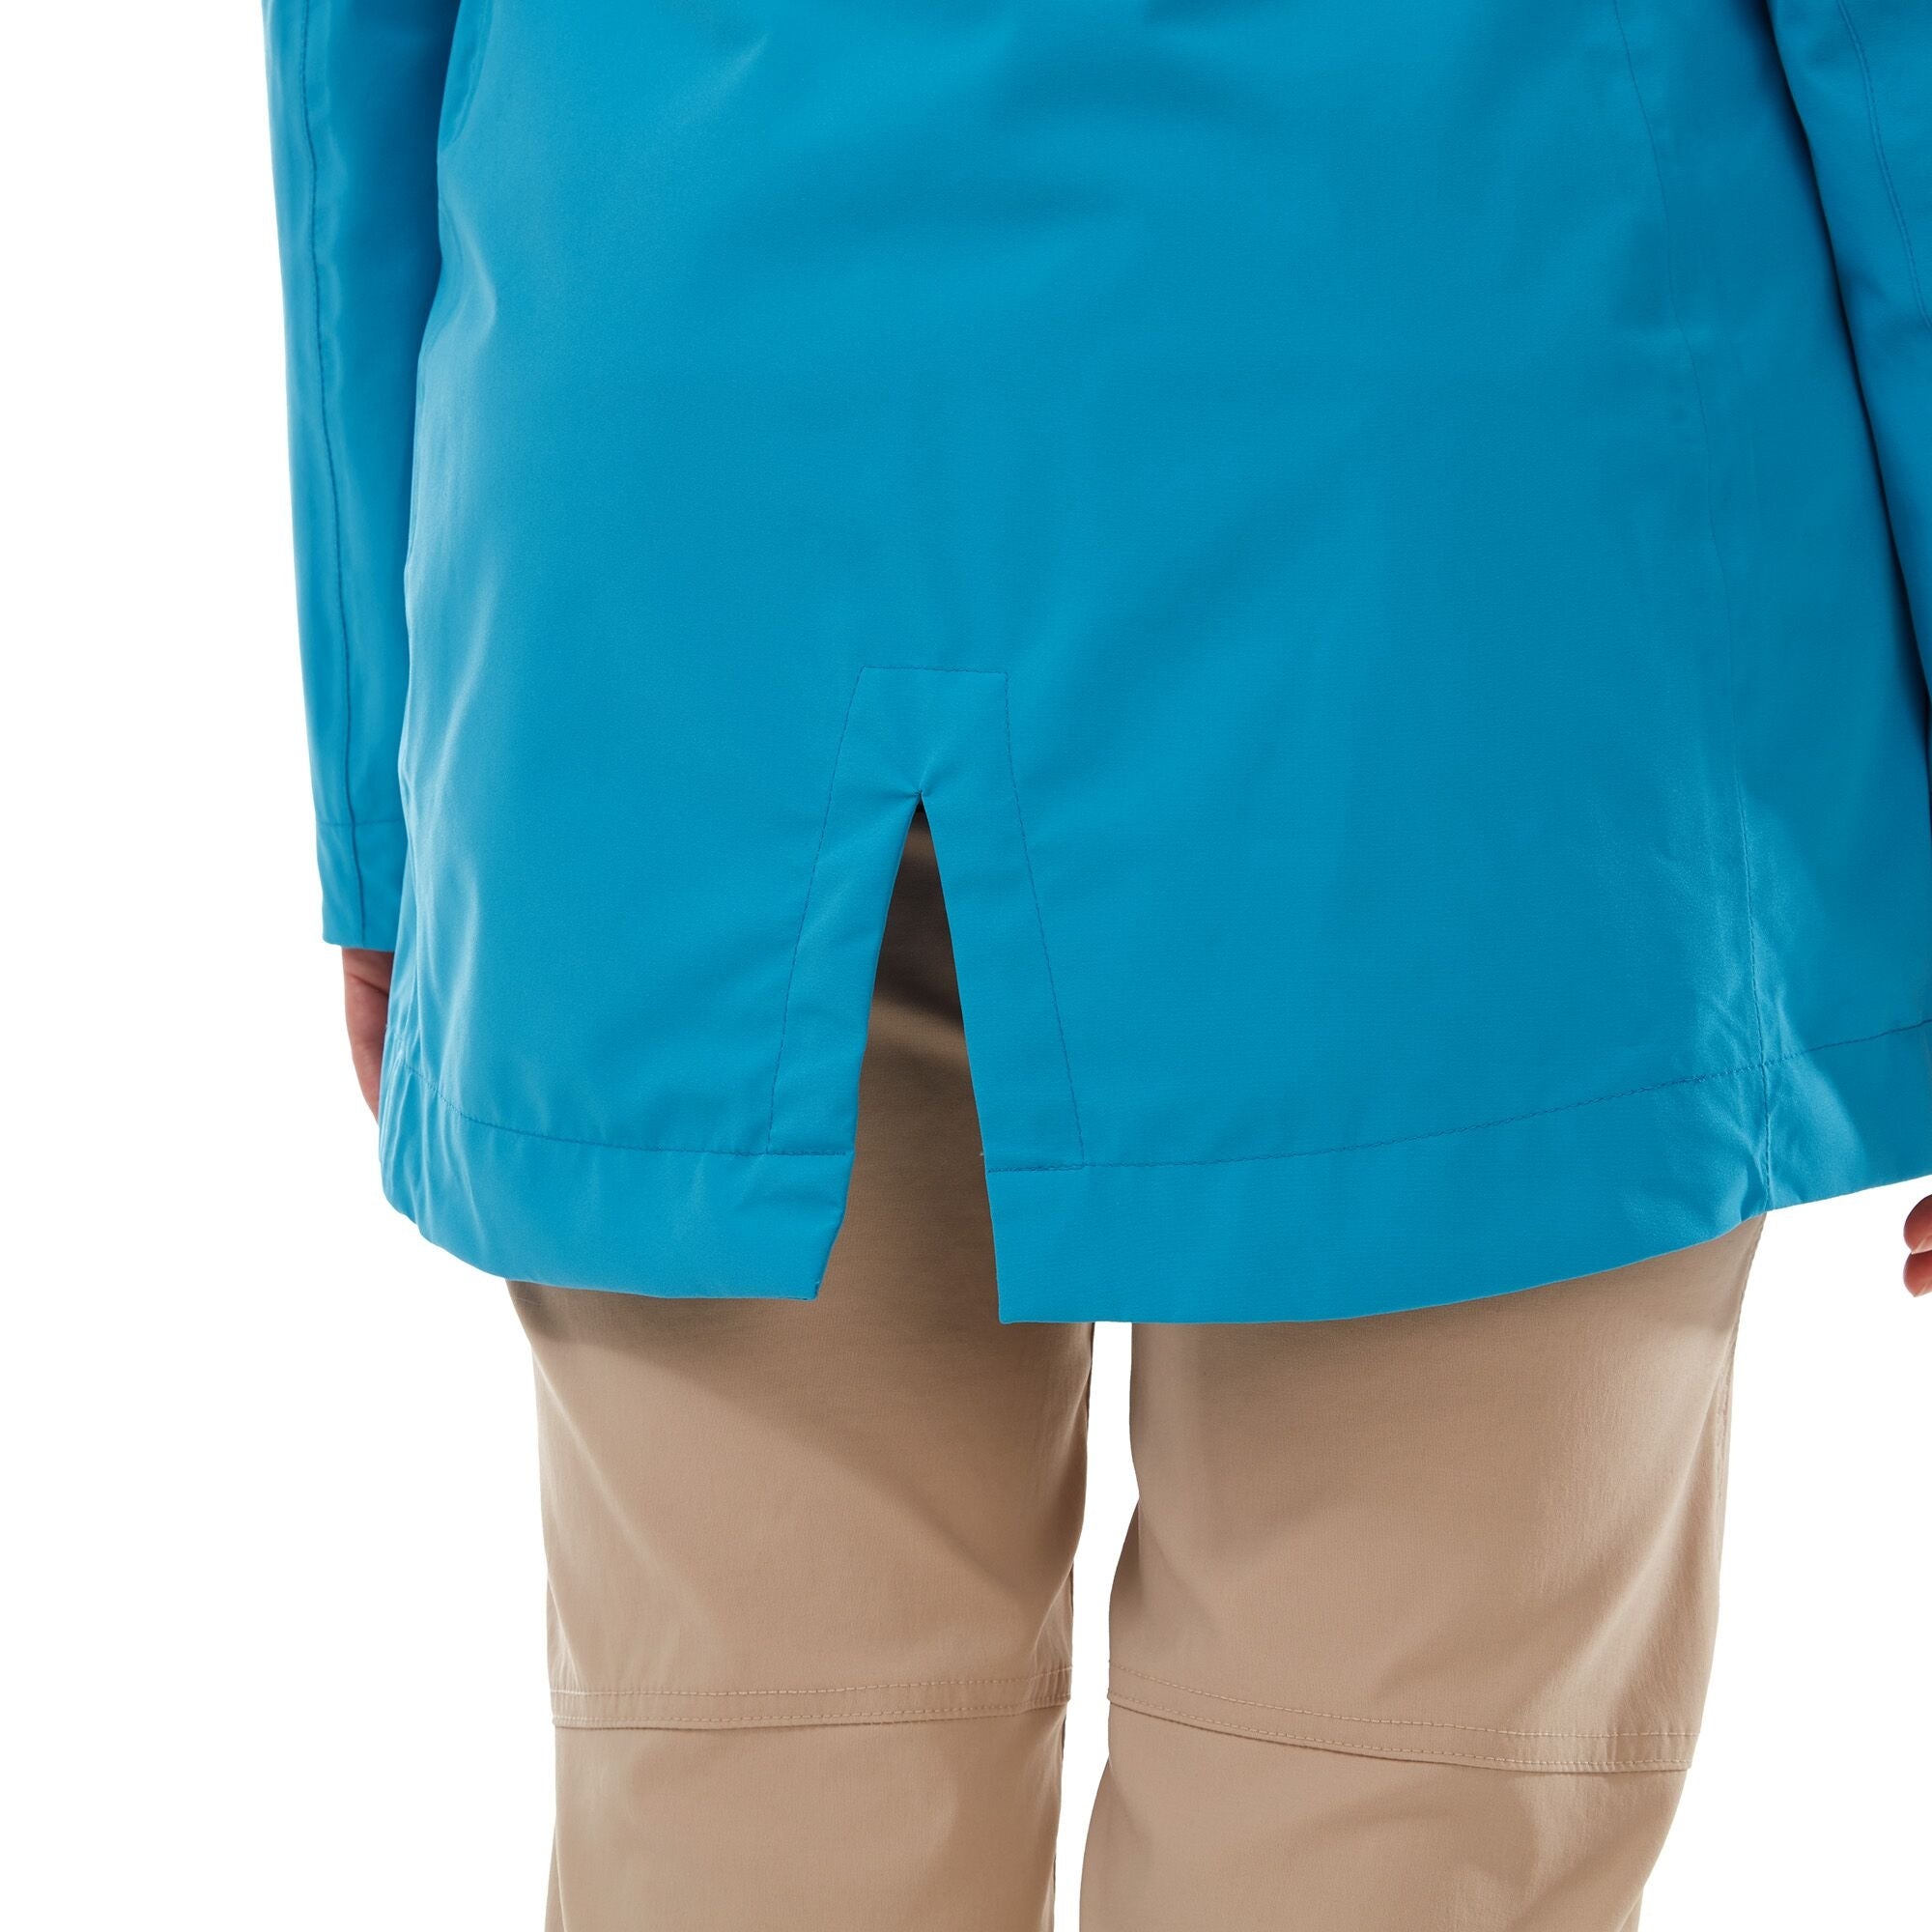 Women's Salia Jacket | Mediterranean Blue